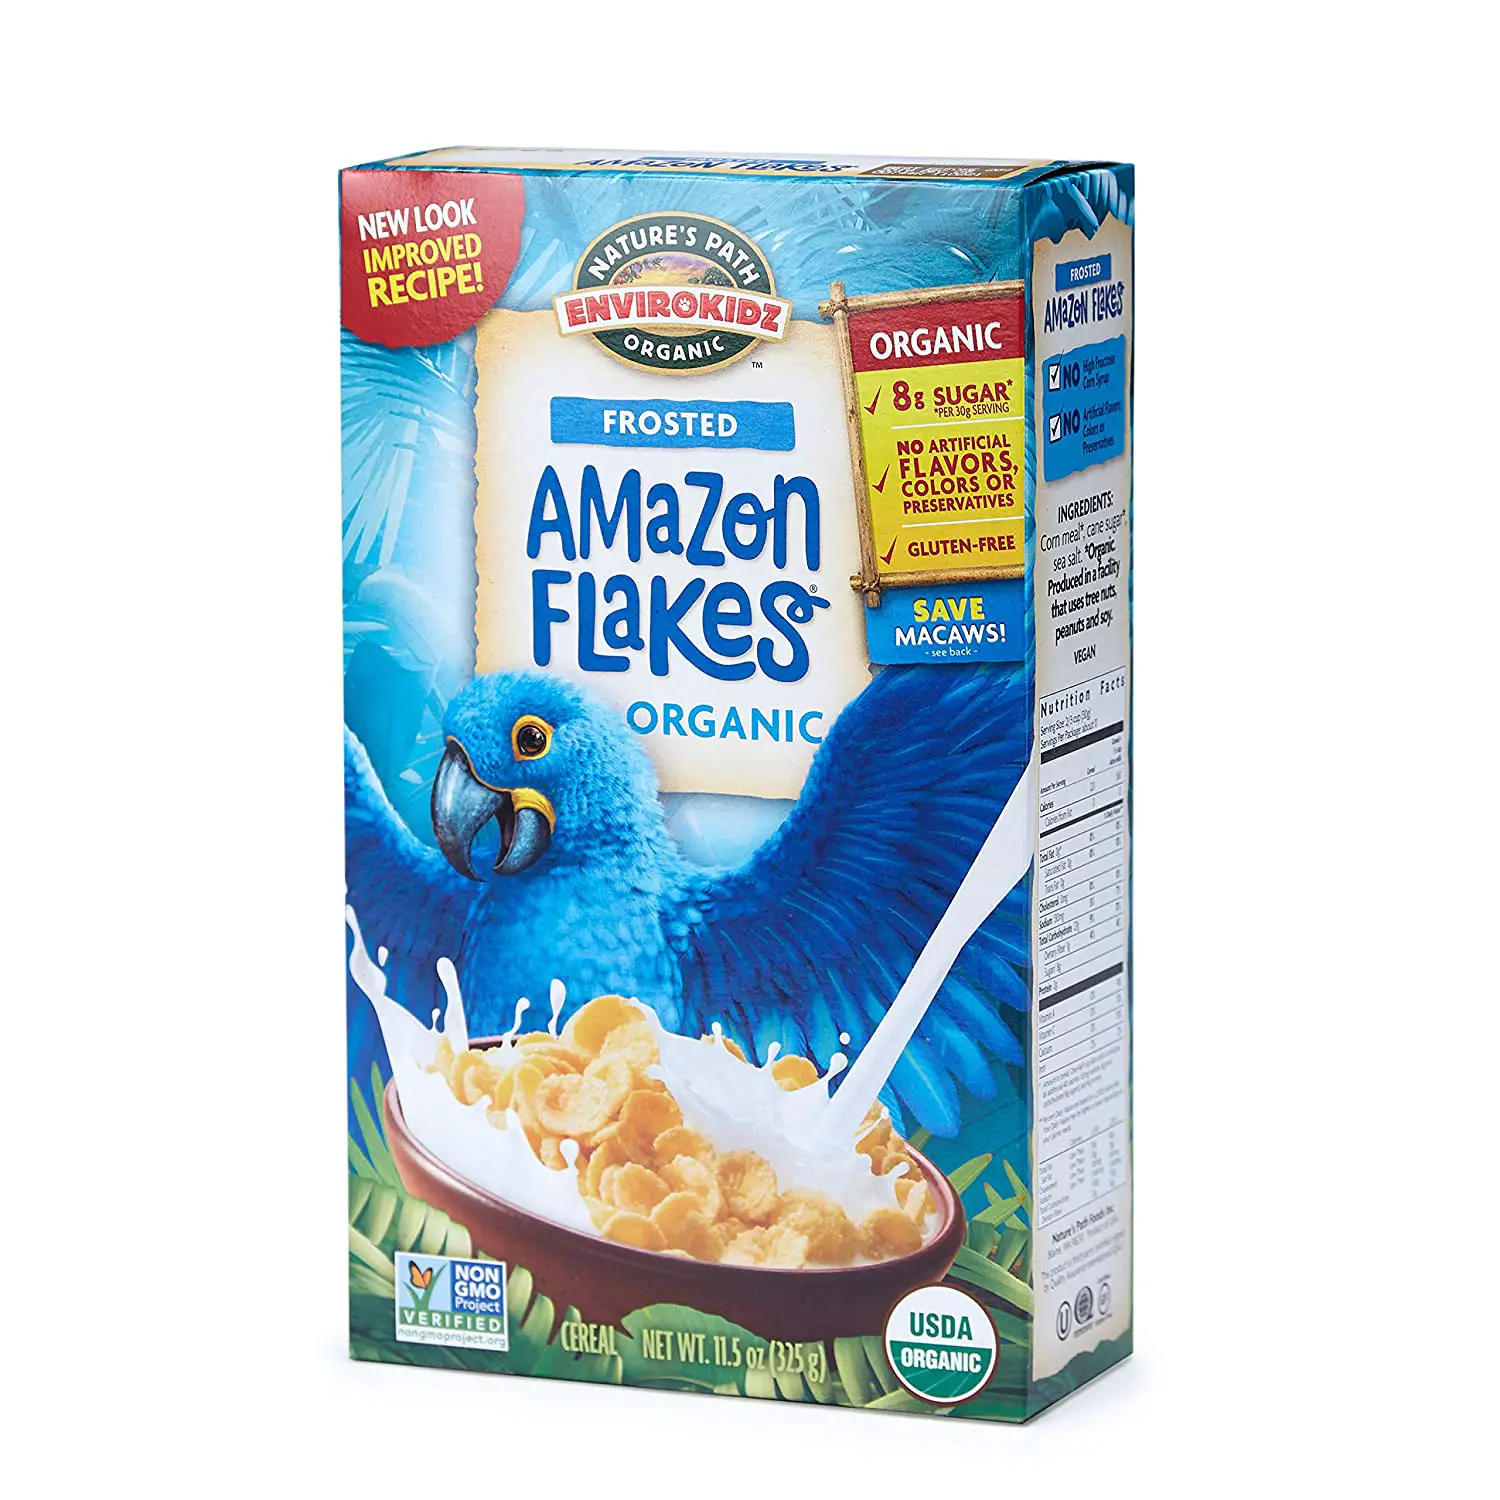 Natureâs Path EnviroKidz Amazon Frosted Flakes Cereal ...